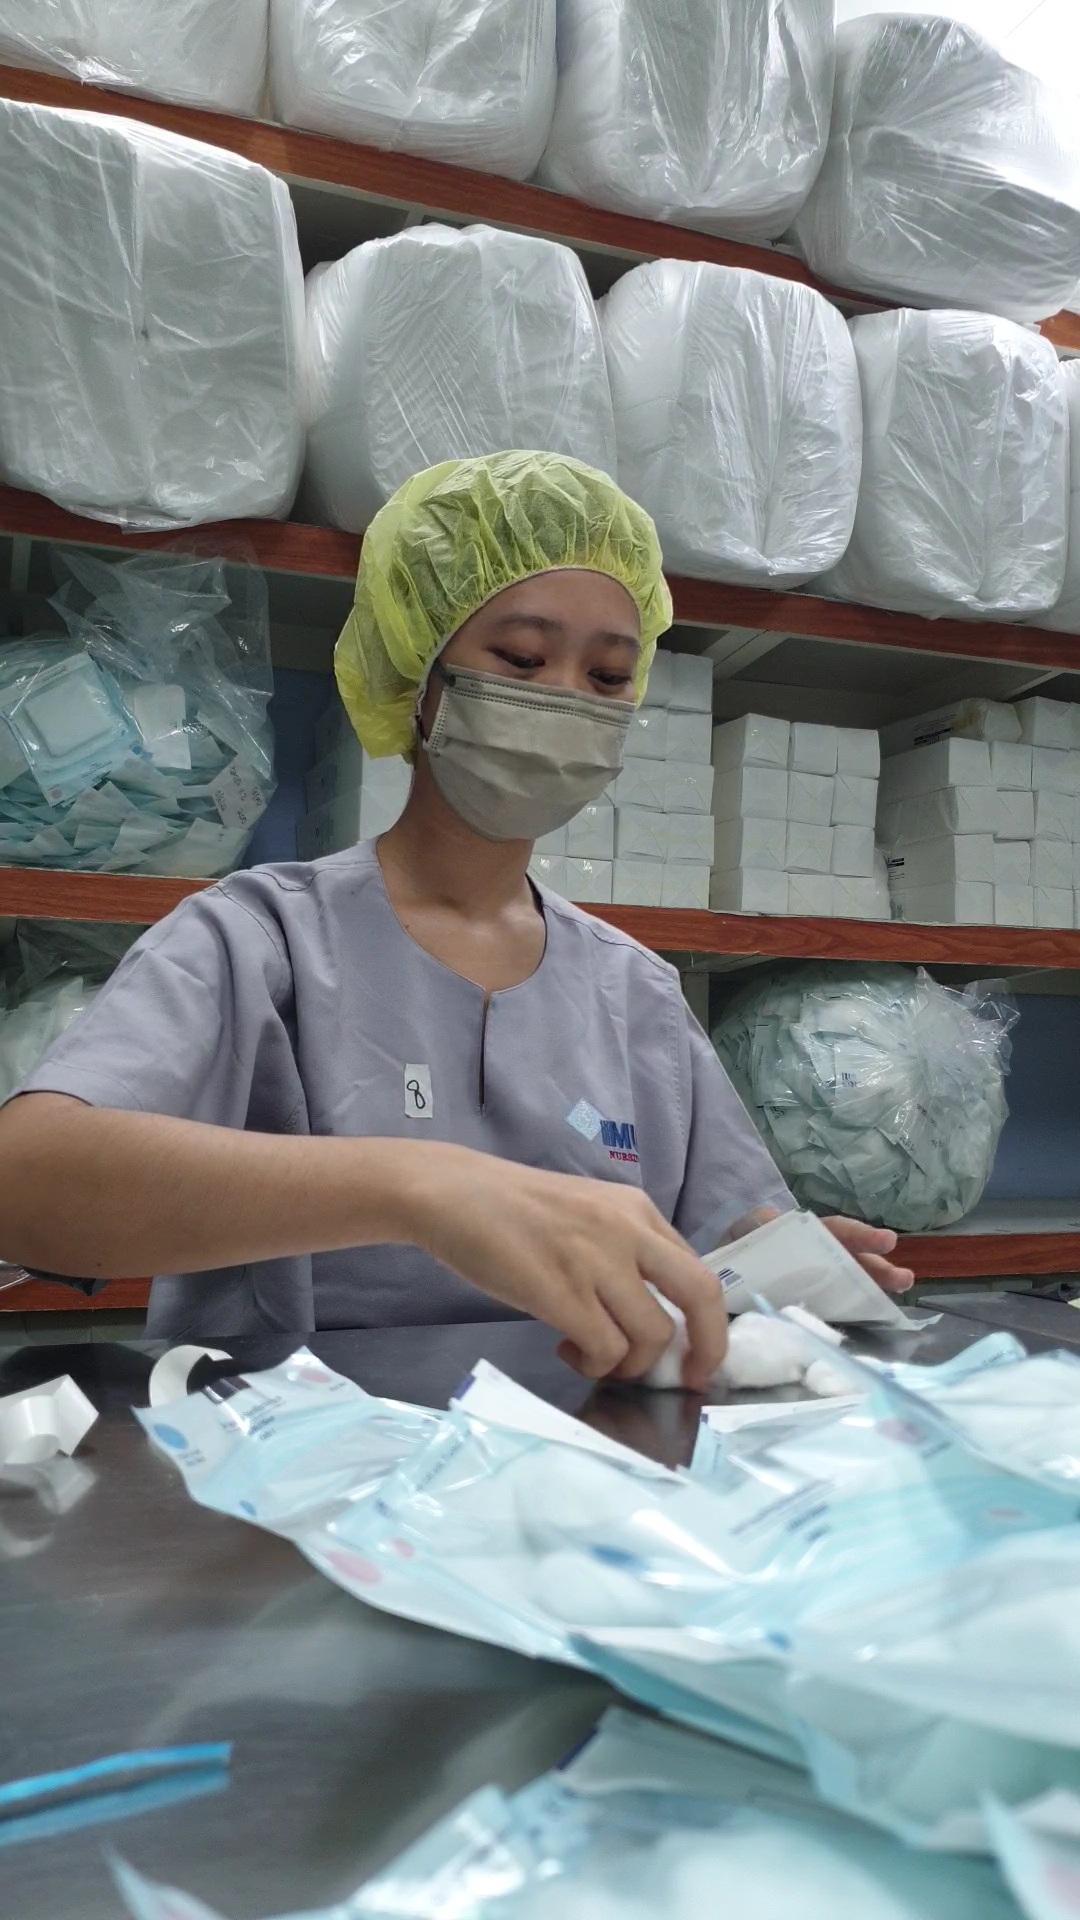 IMU Nursing student, Tan Cai Ing shares her experience at the general operation theatre (GOT) of Hospital Tuanku Ja'afar, Seremban.